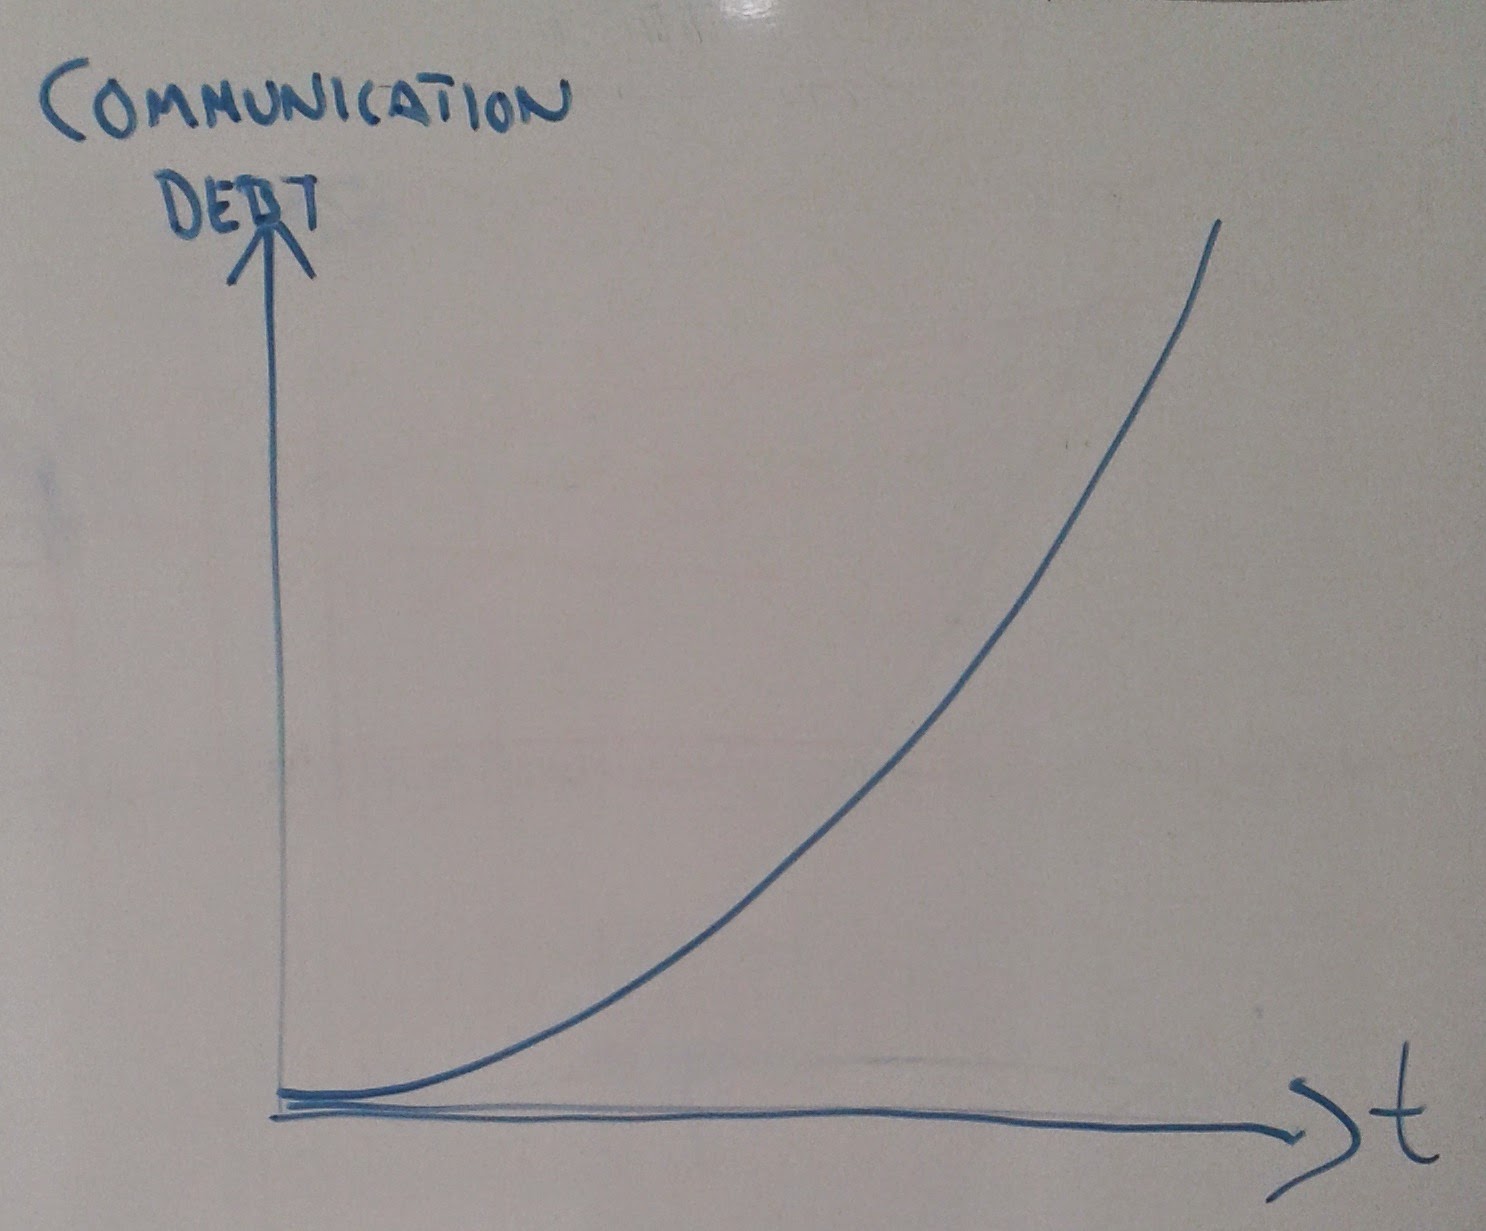 Communication Debt